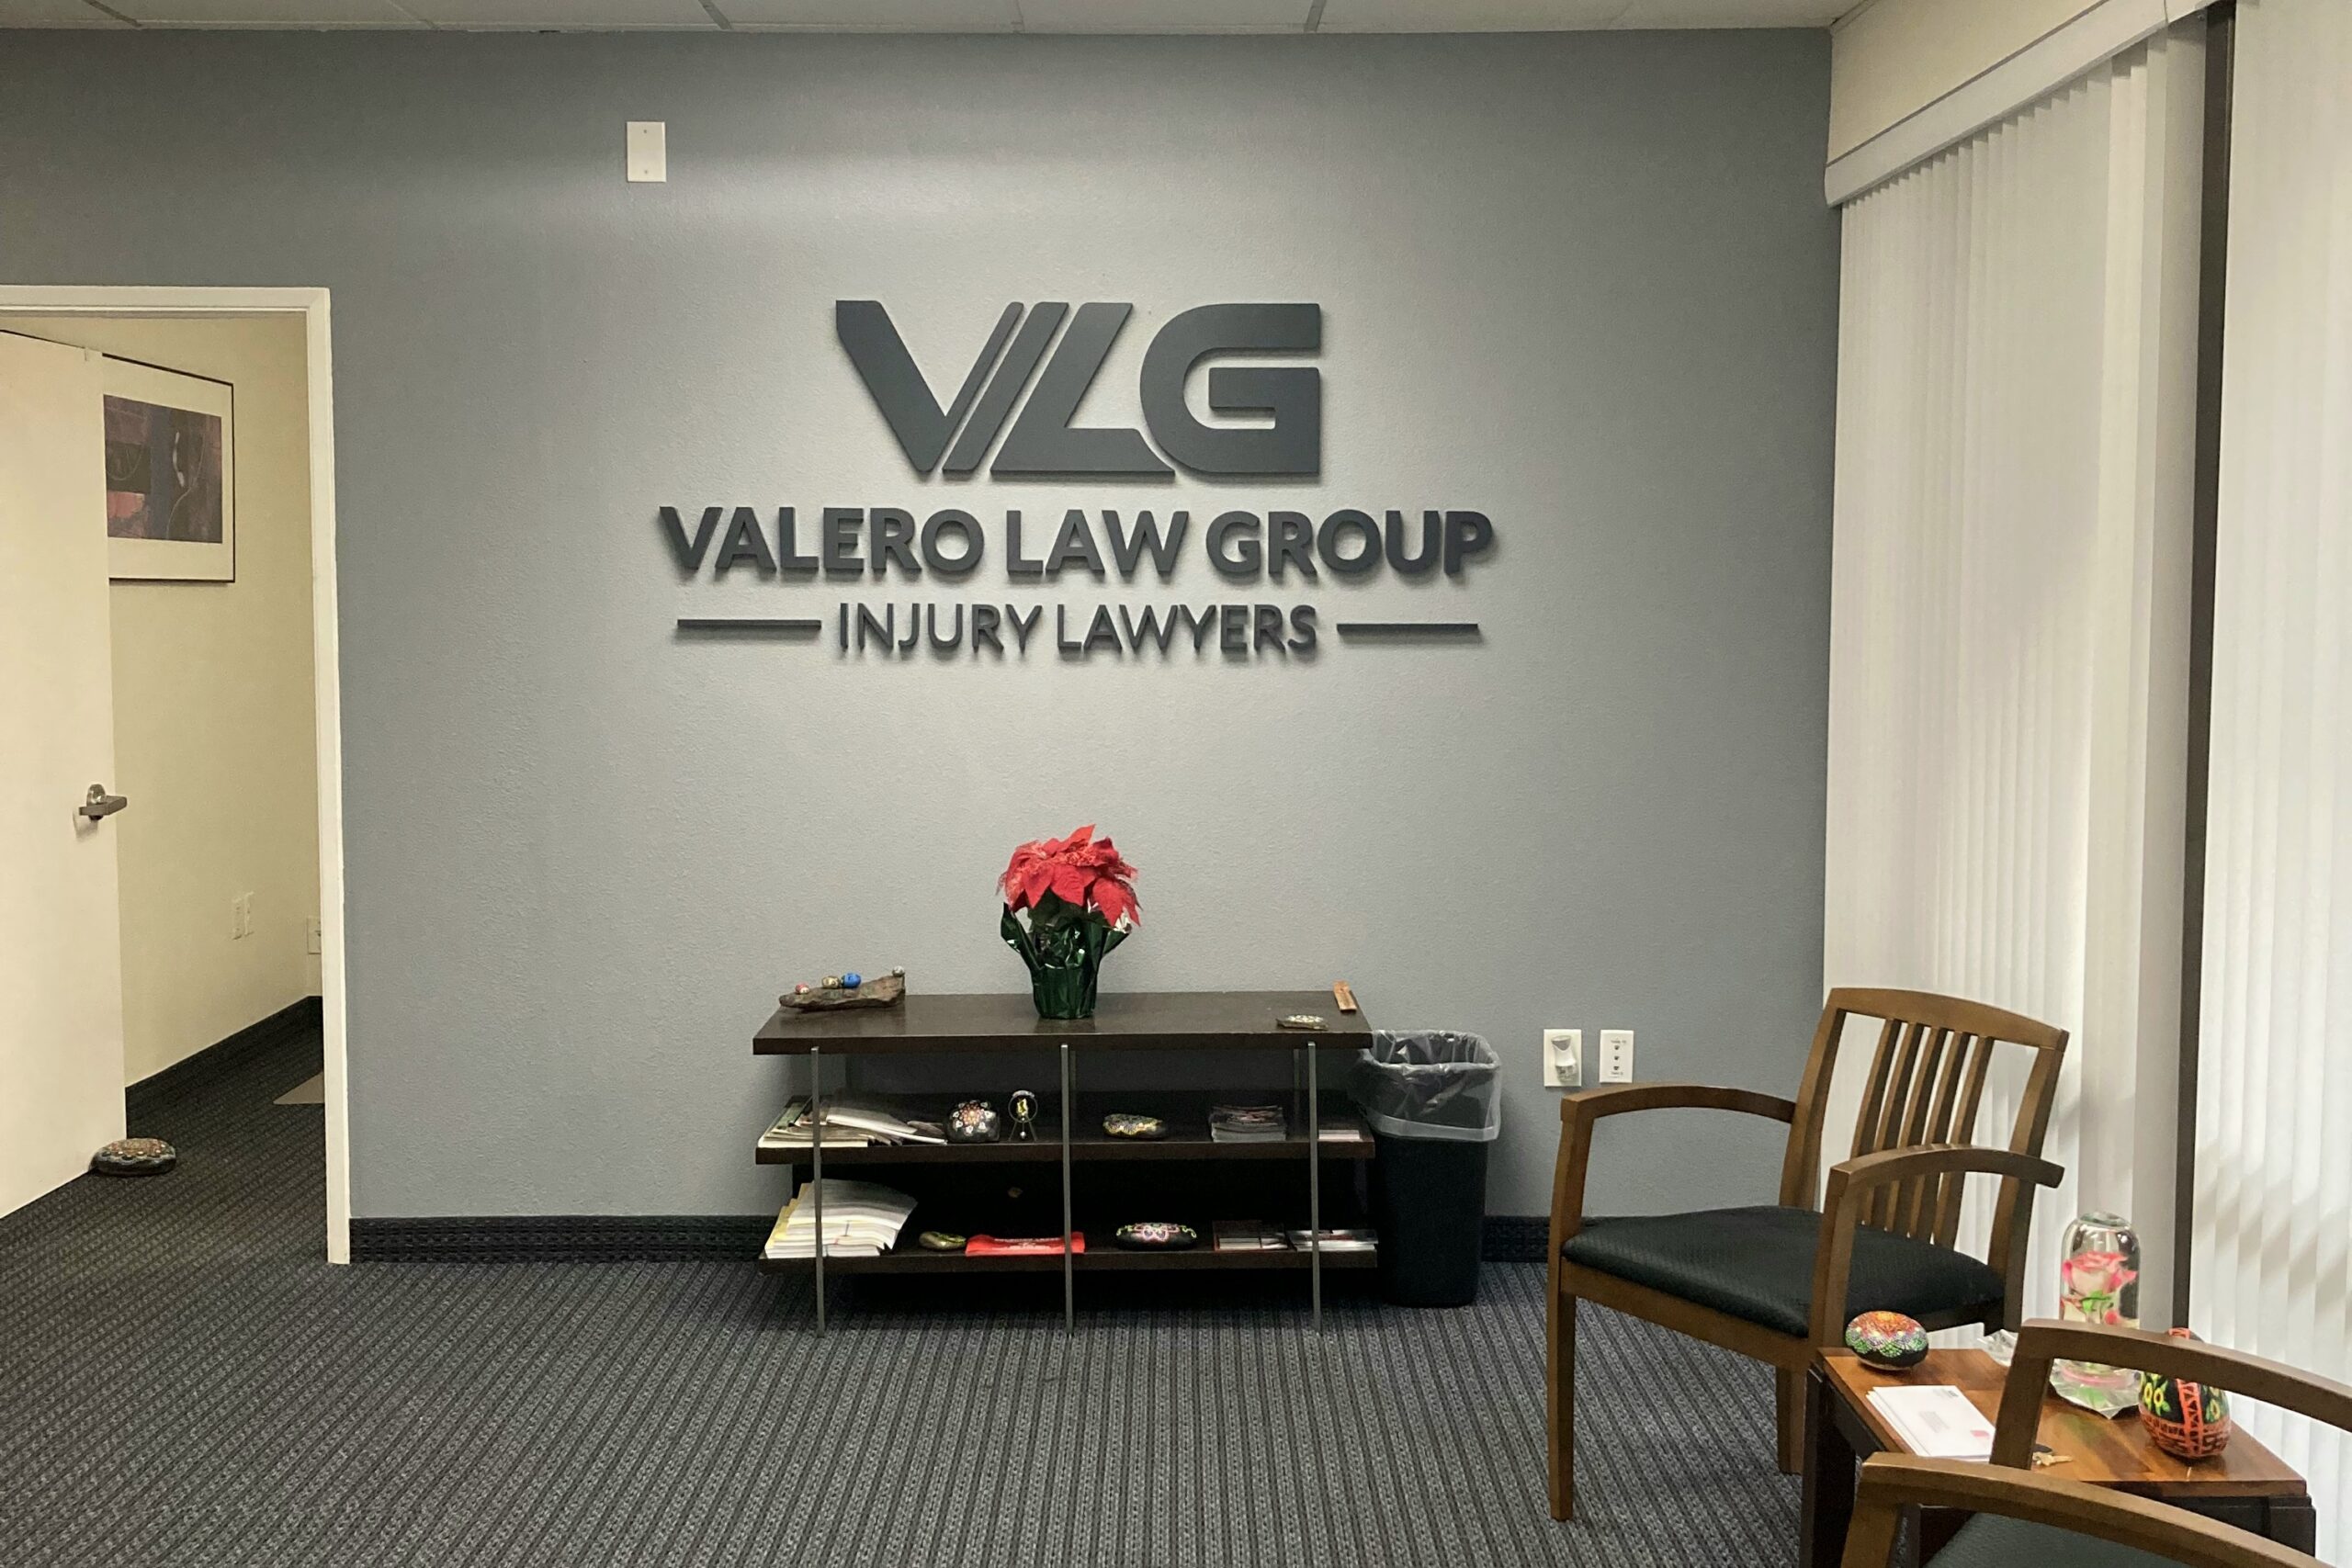 Reception desk sign for Valero Law Group